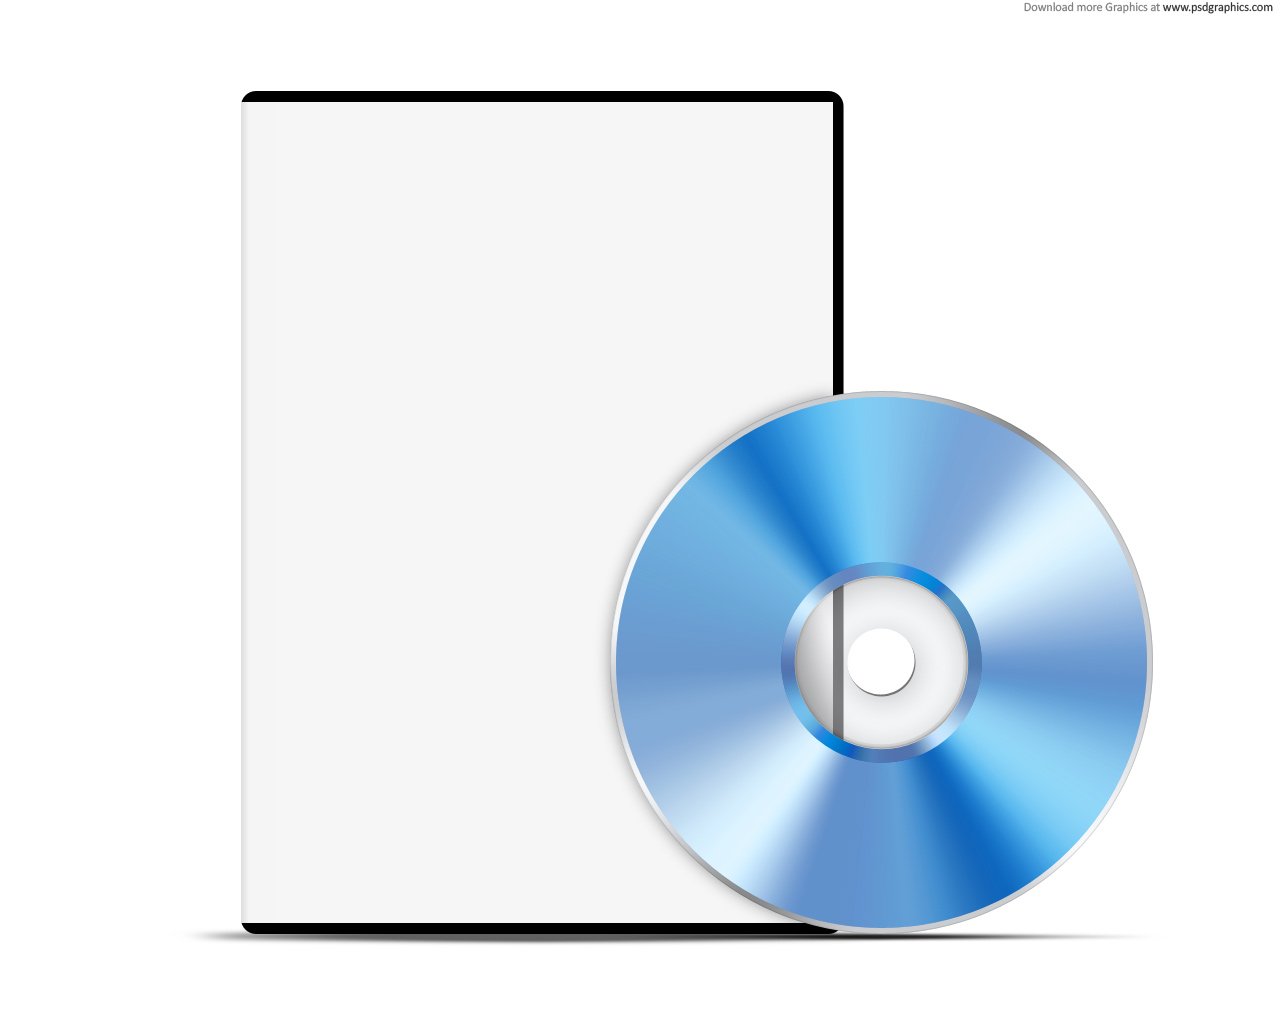 Blank CD photoshop template